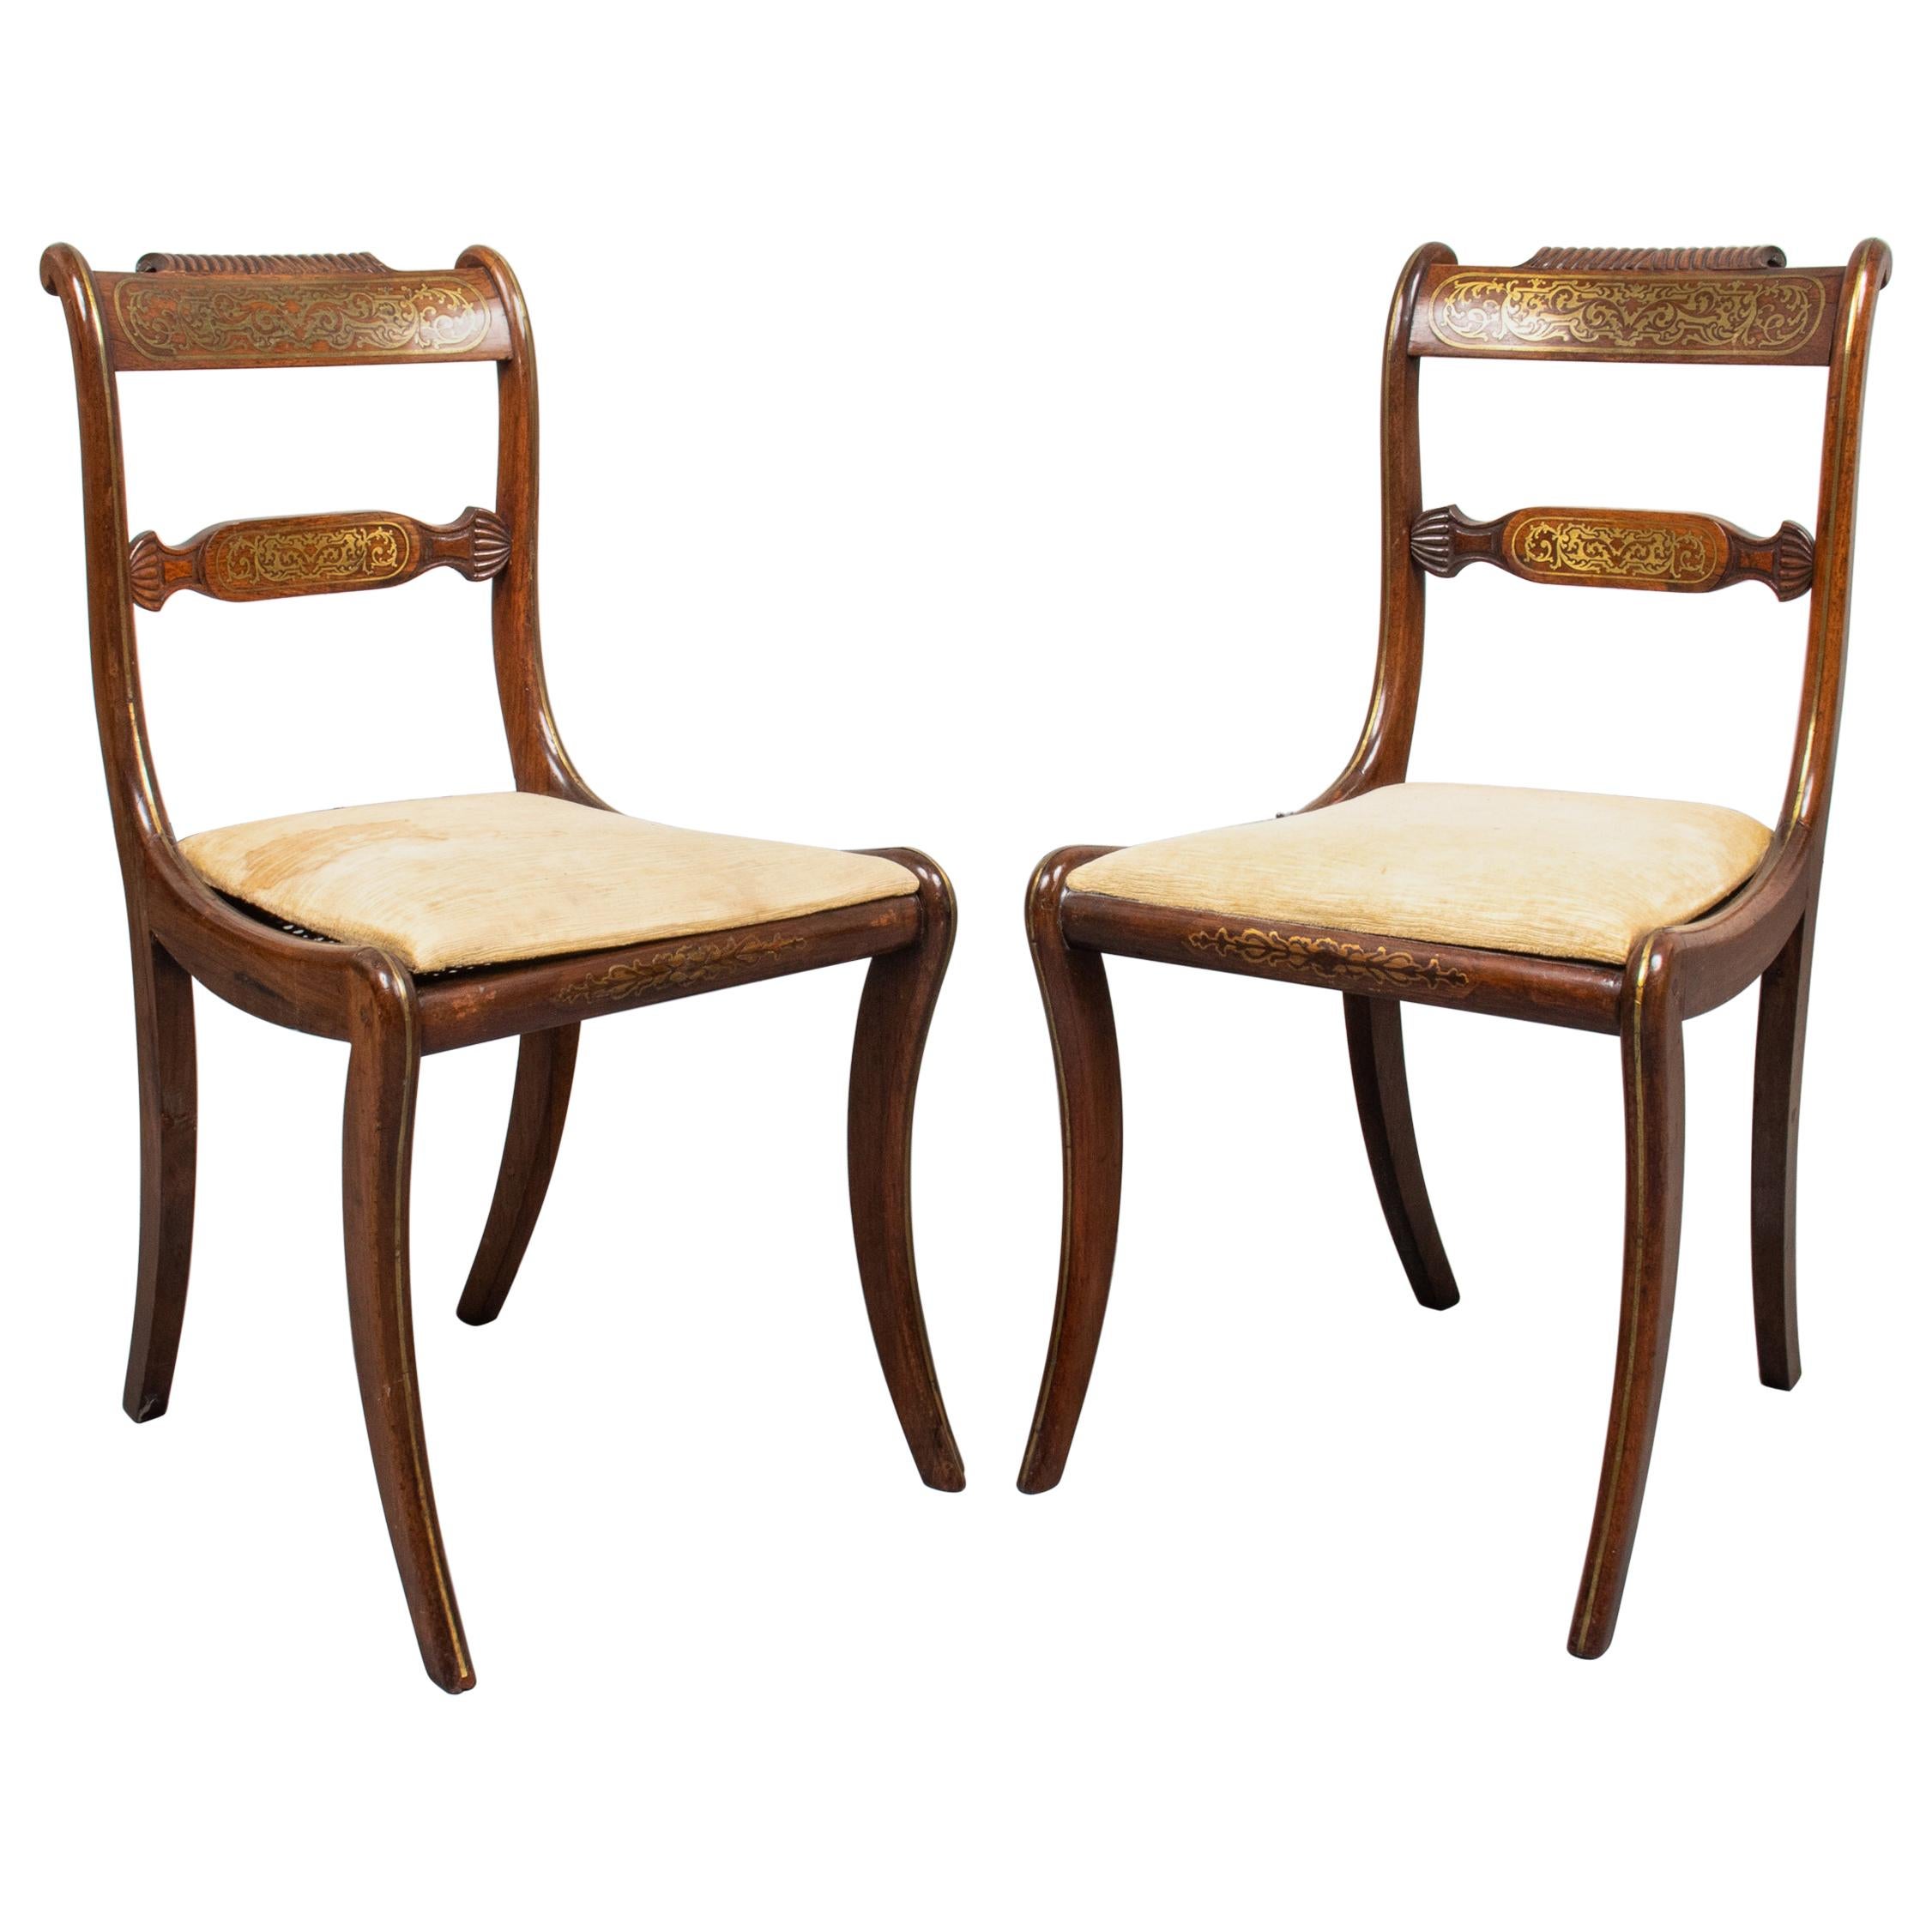 English Regency Brass Inlaid Side Chairs